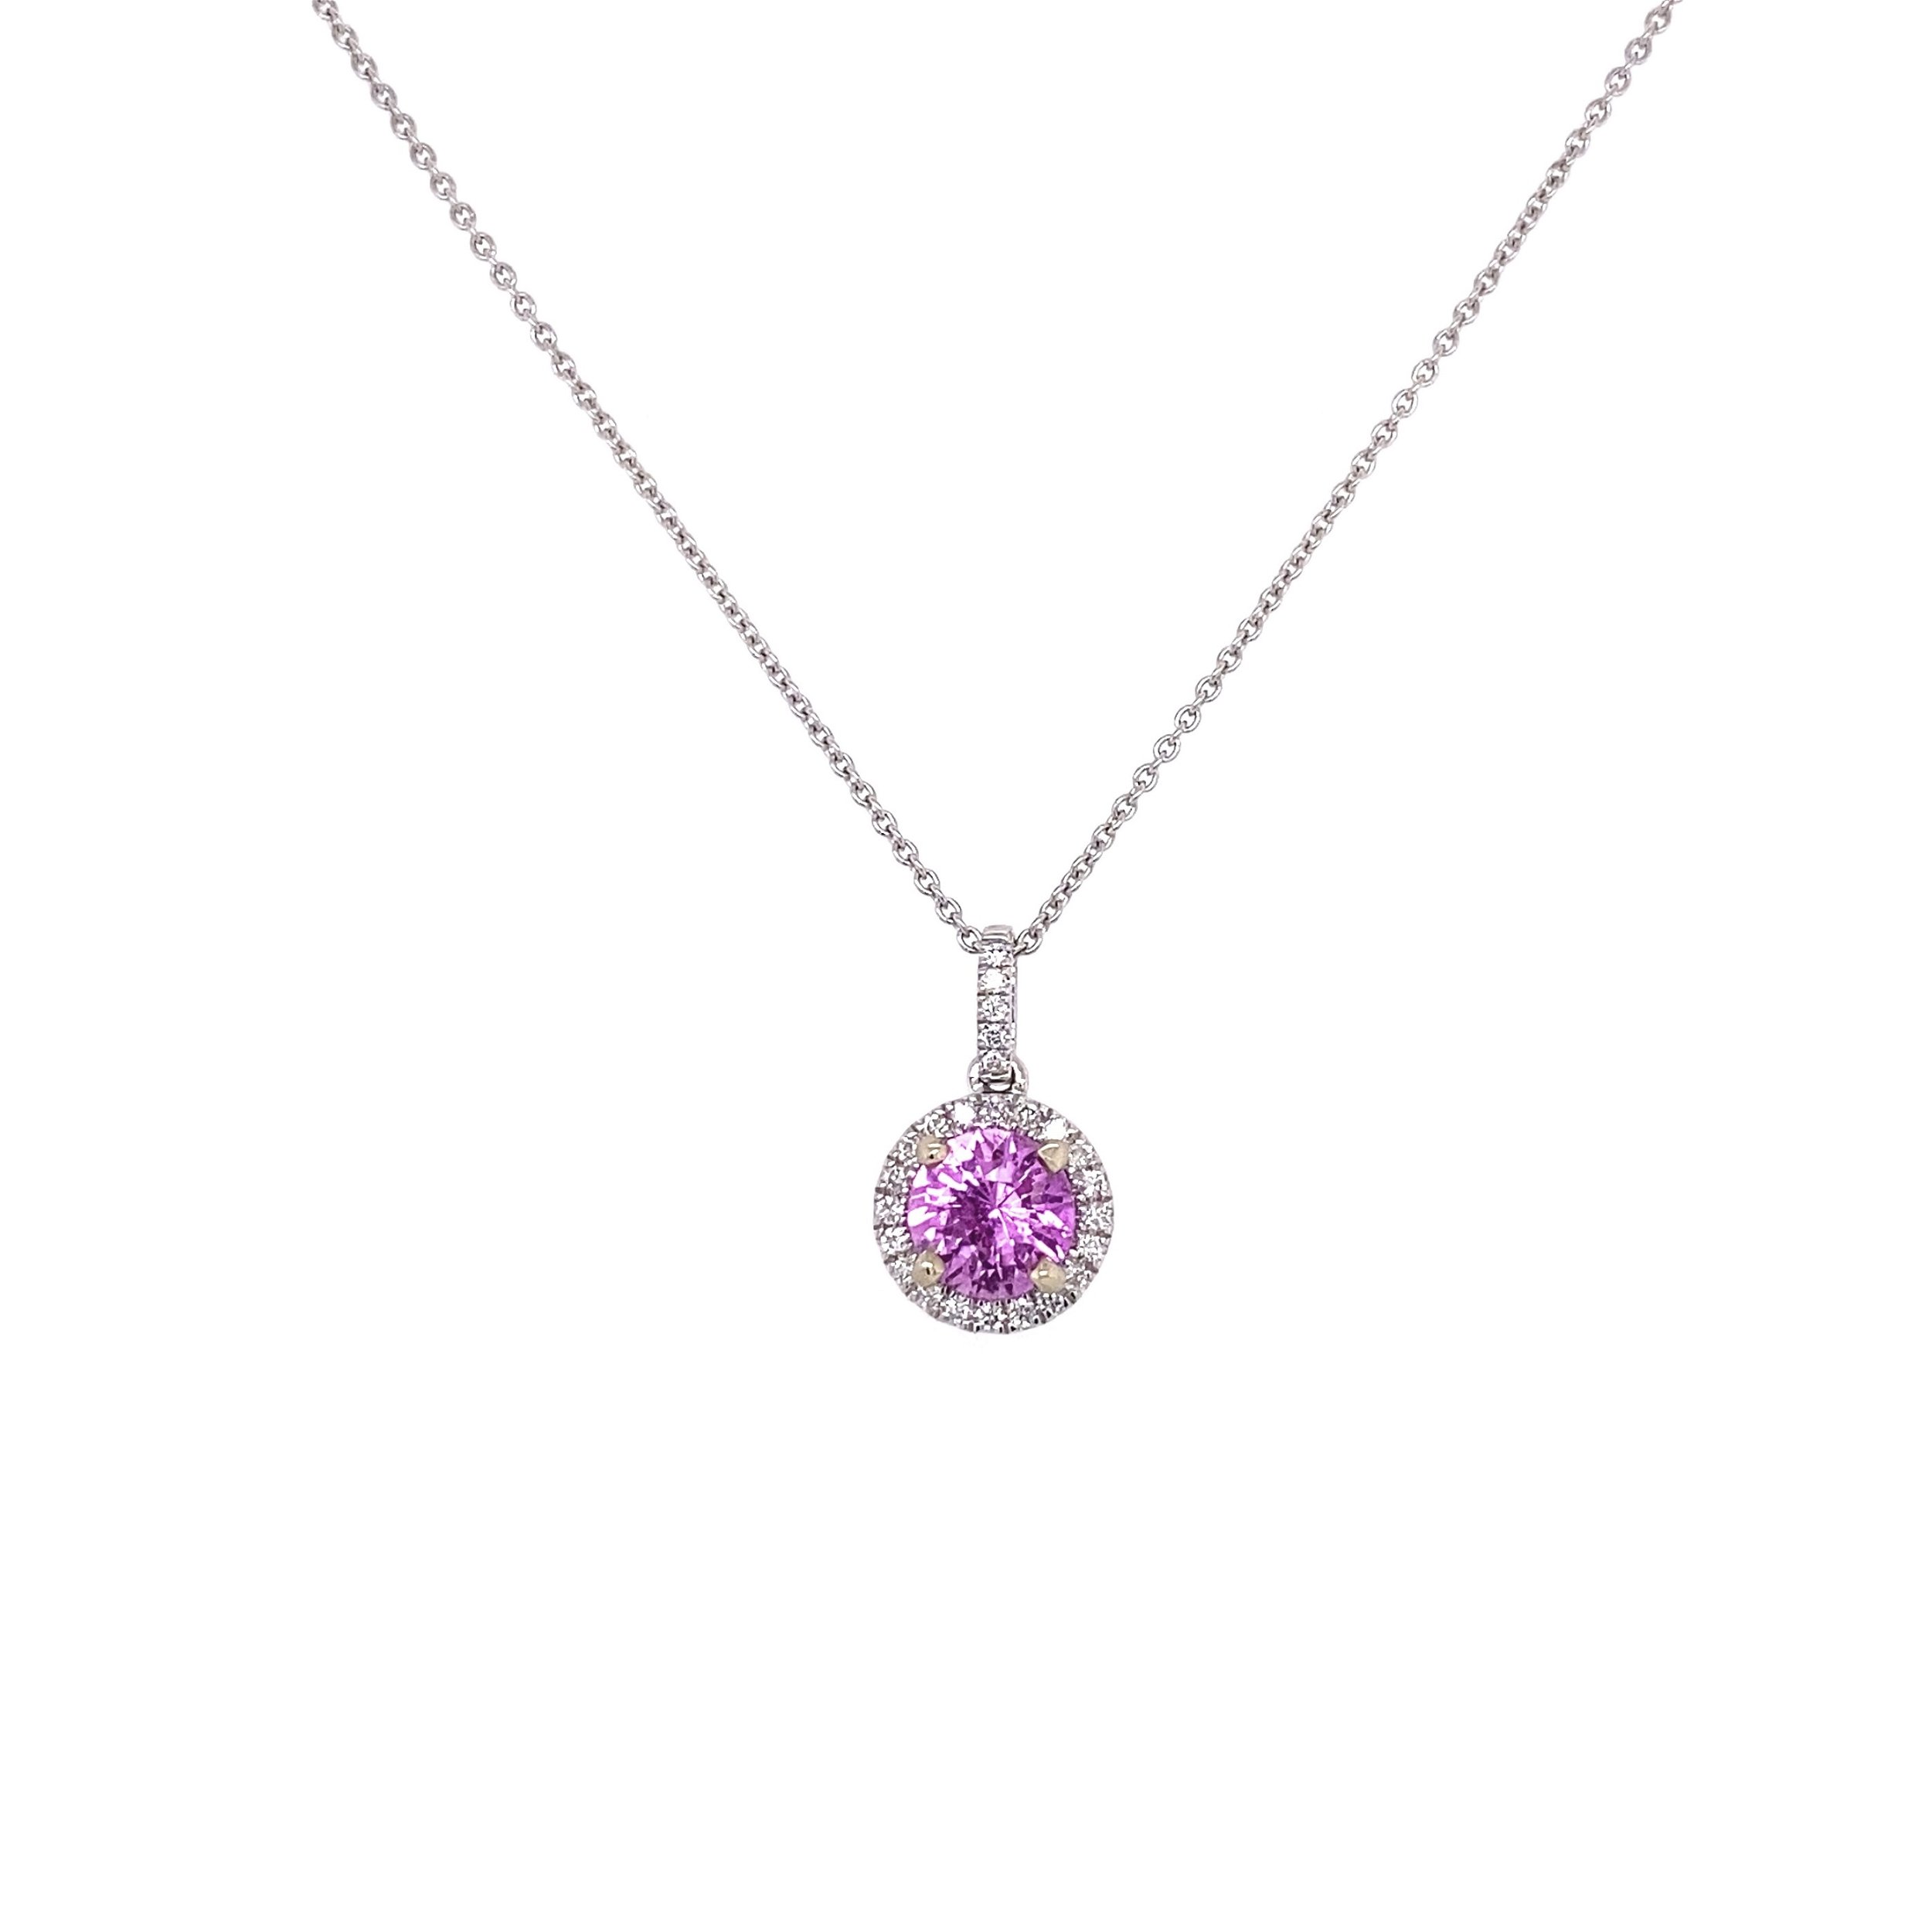 14K WG 1.03ct Round Pink Sapphire & .16tcw Diamond Necklace 2.9g, 16in